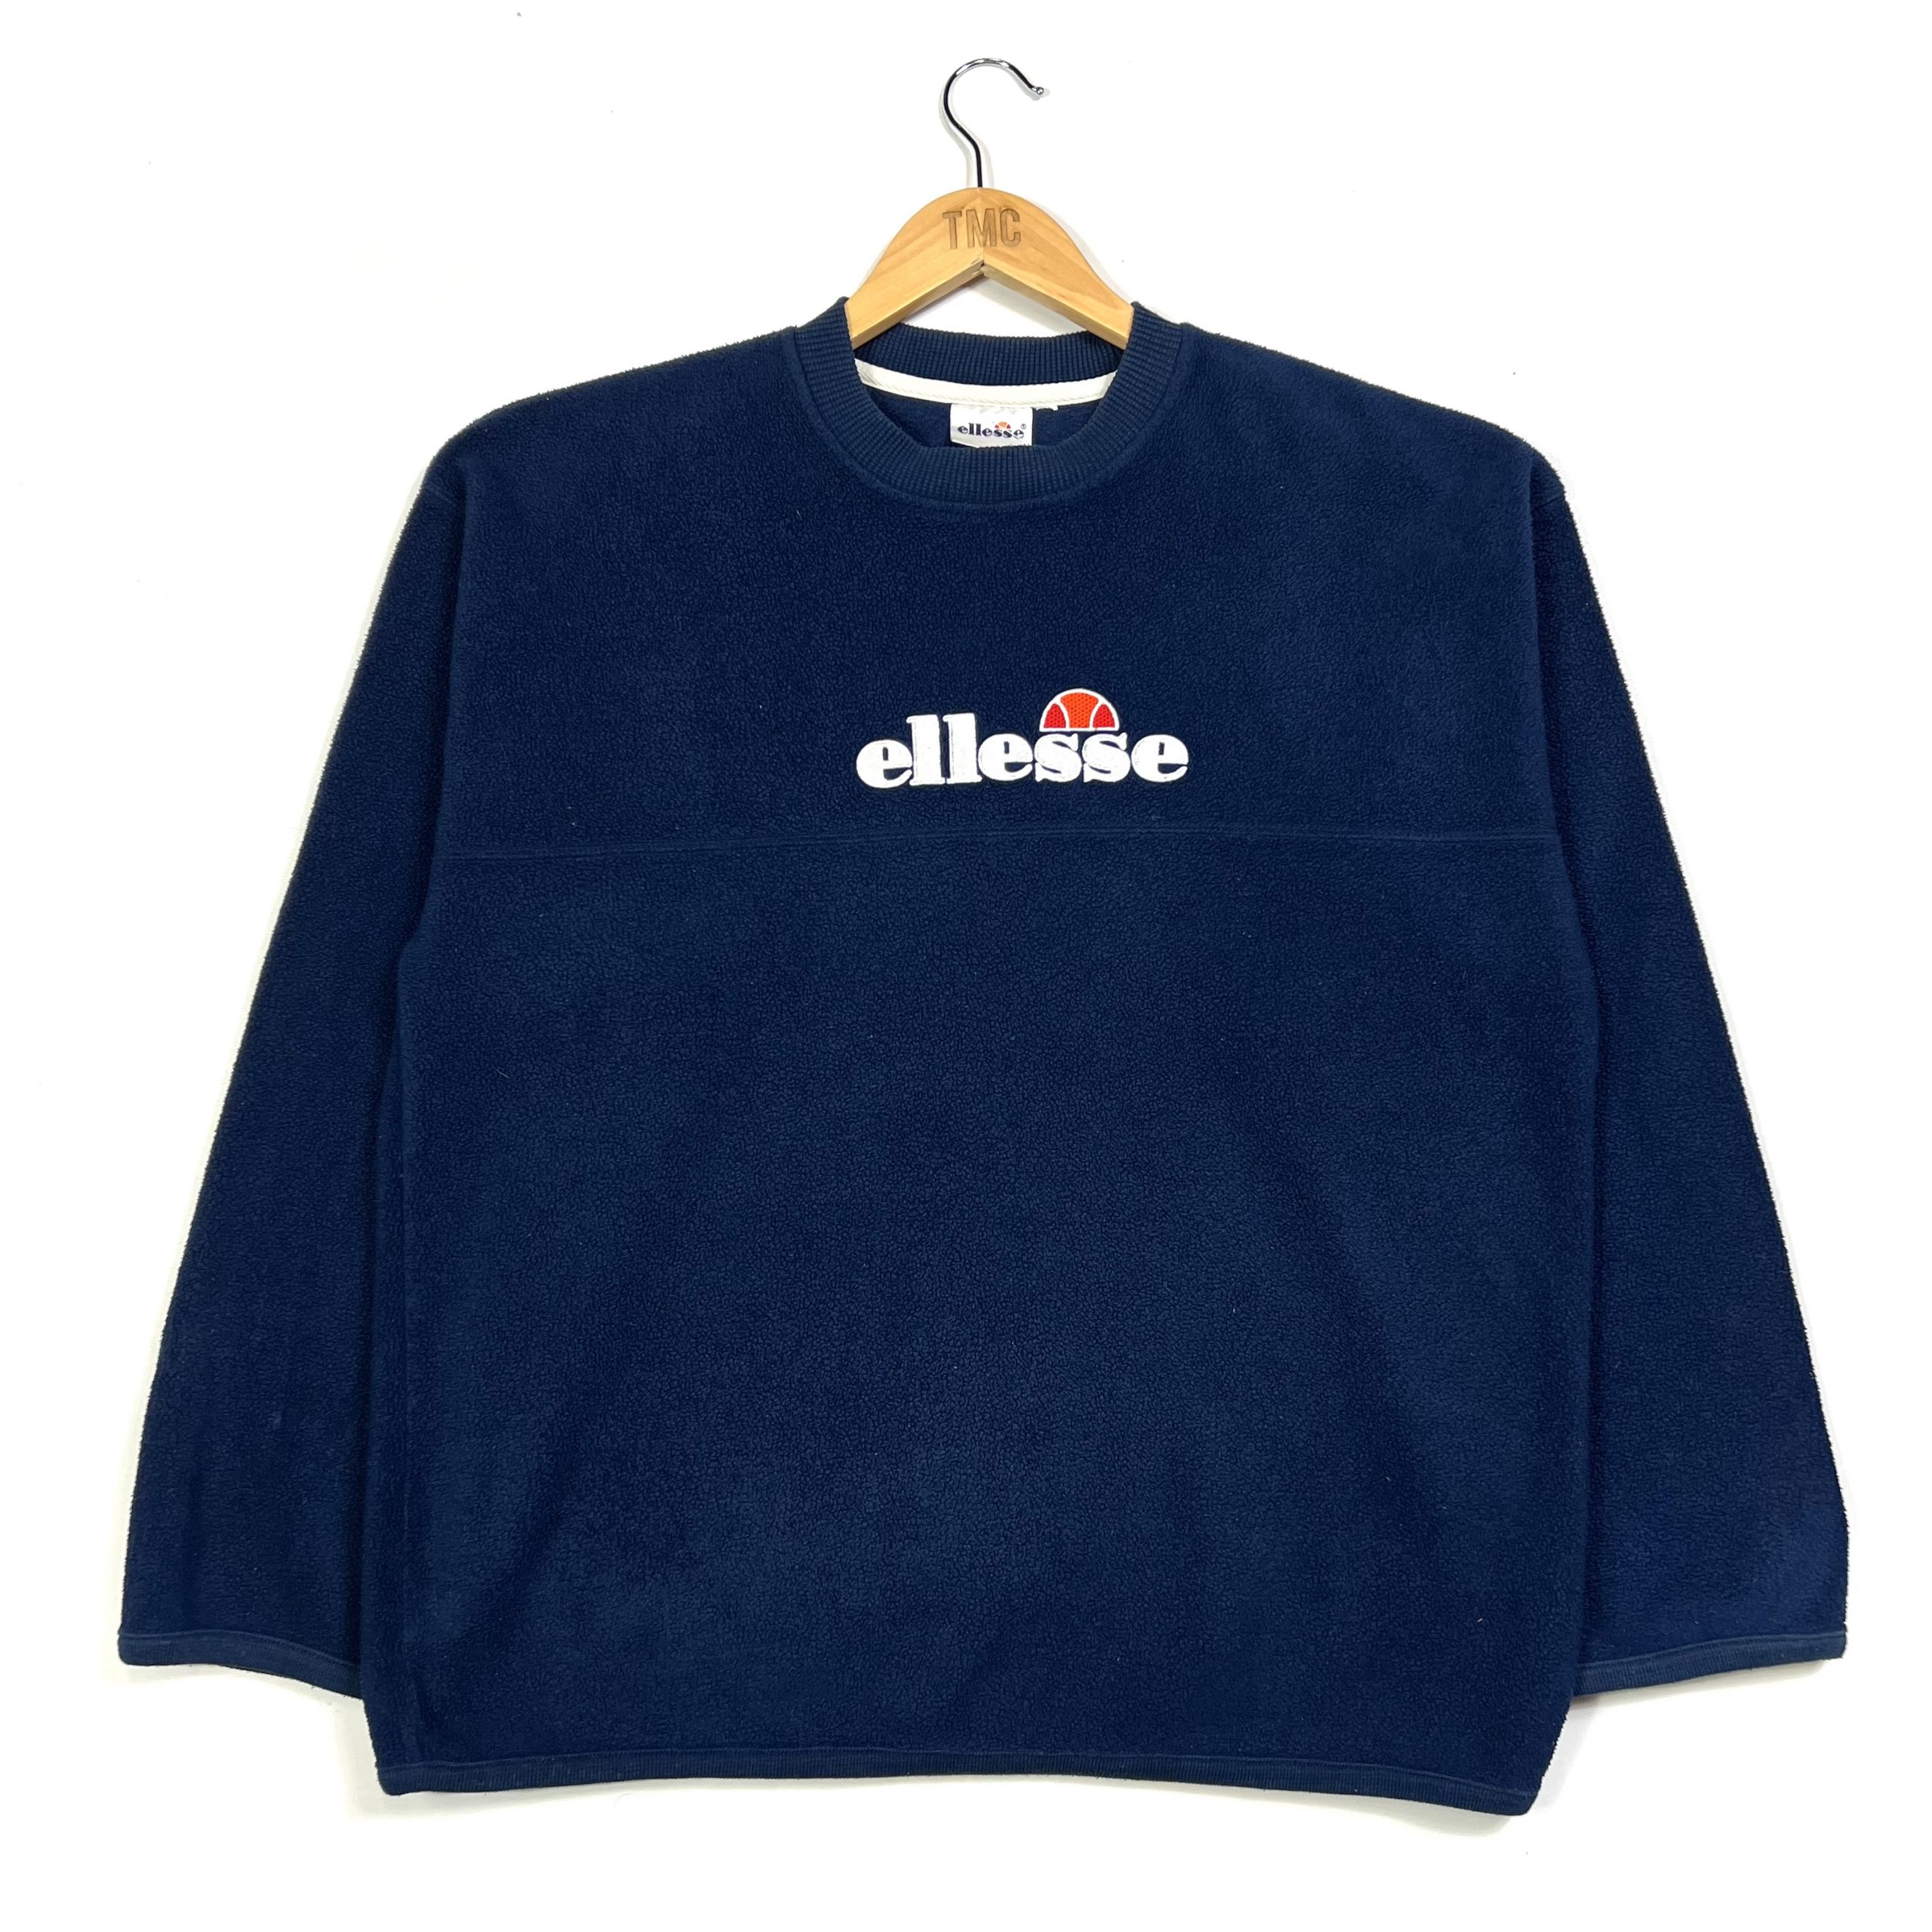 Ellesse Fleece Vintage - Clothing - Sweatshirt - TMC L - Vintage Navy